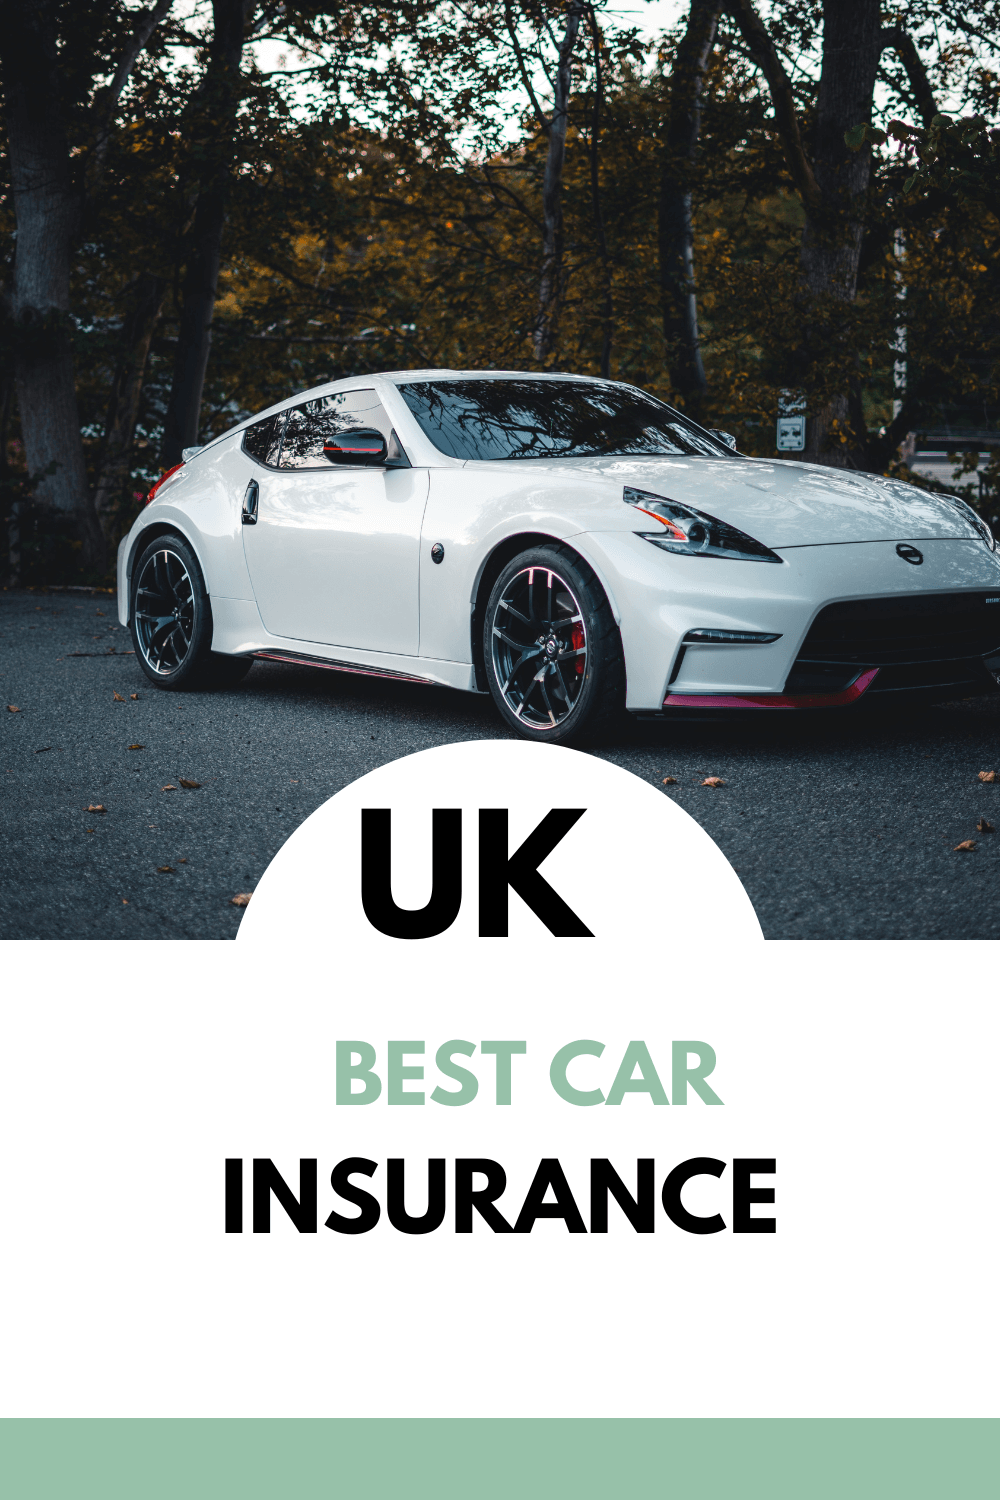 UK best car insurance insuring a luxury car